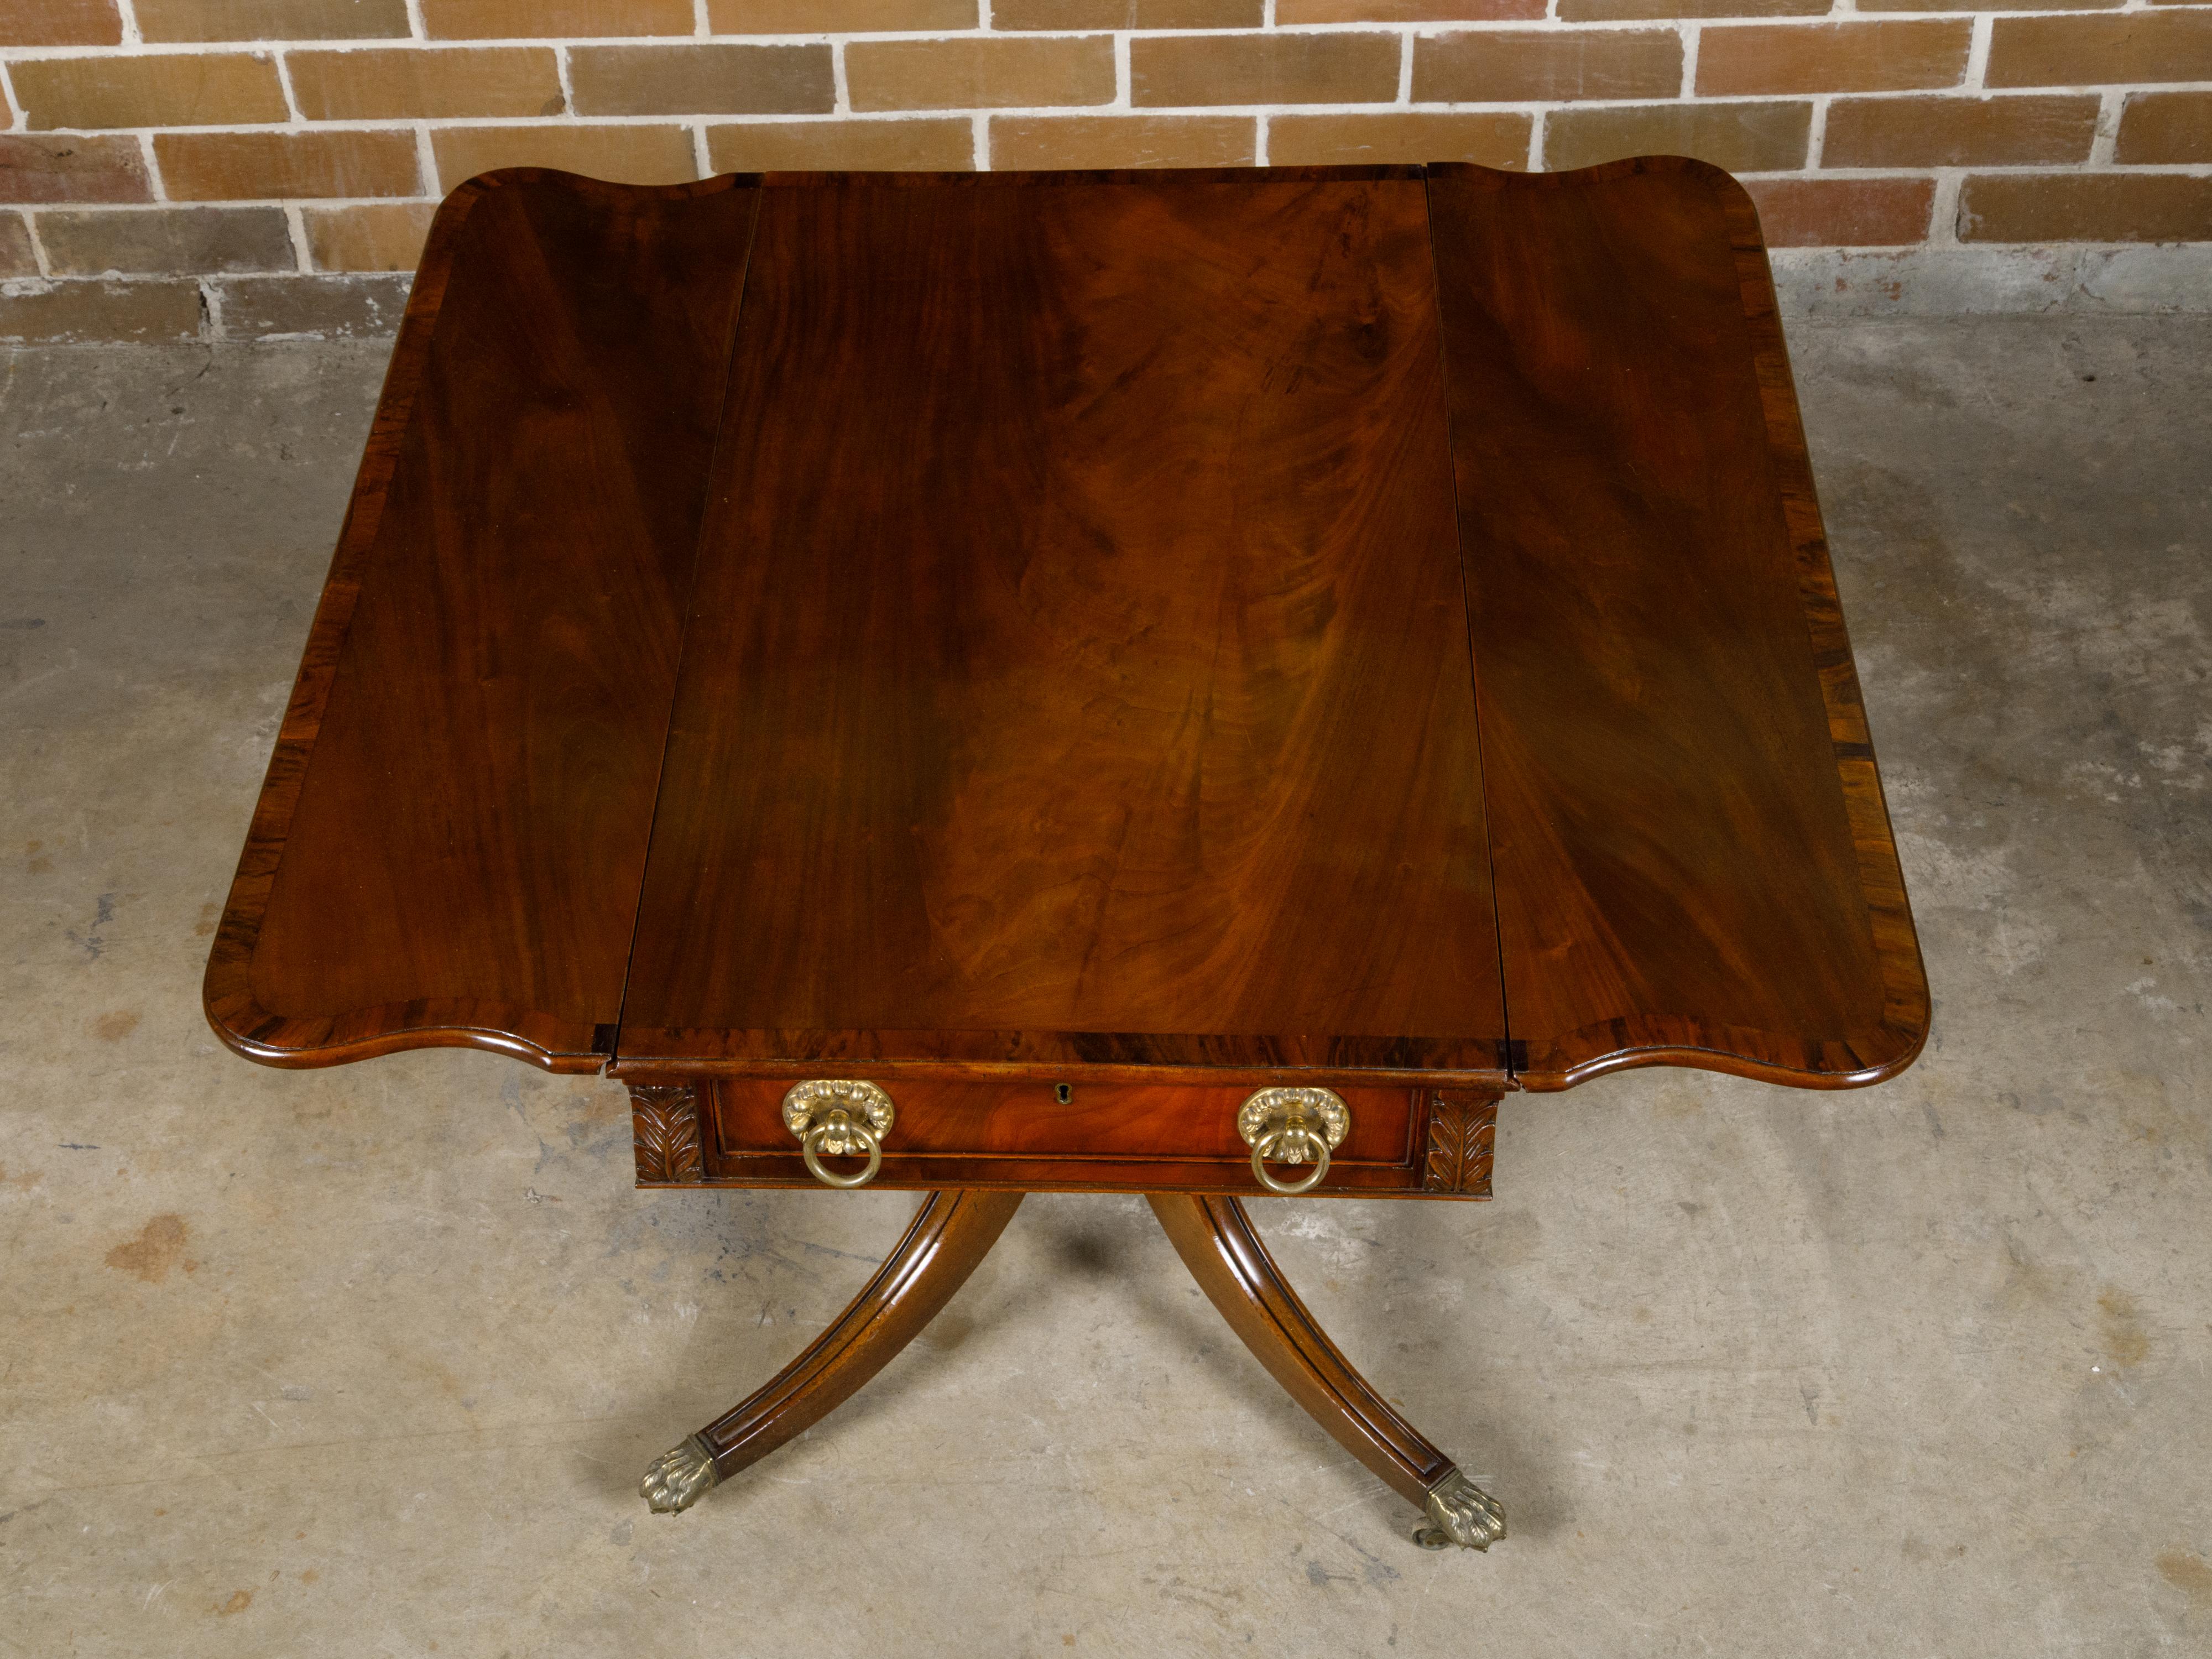 Regency English Mahogany Pembroke Table with Drawer, Quadripod Base, Lion Feet For Sale 4